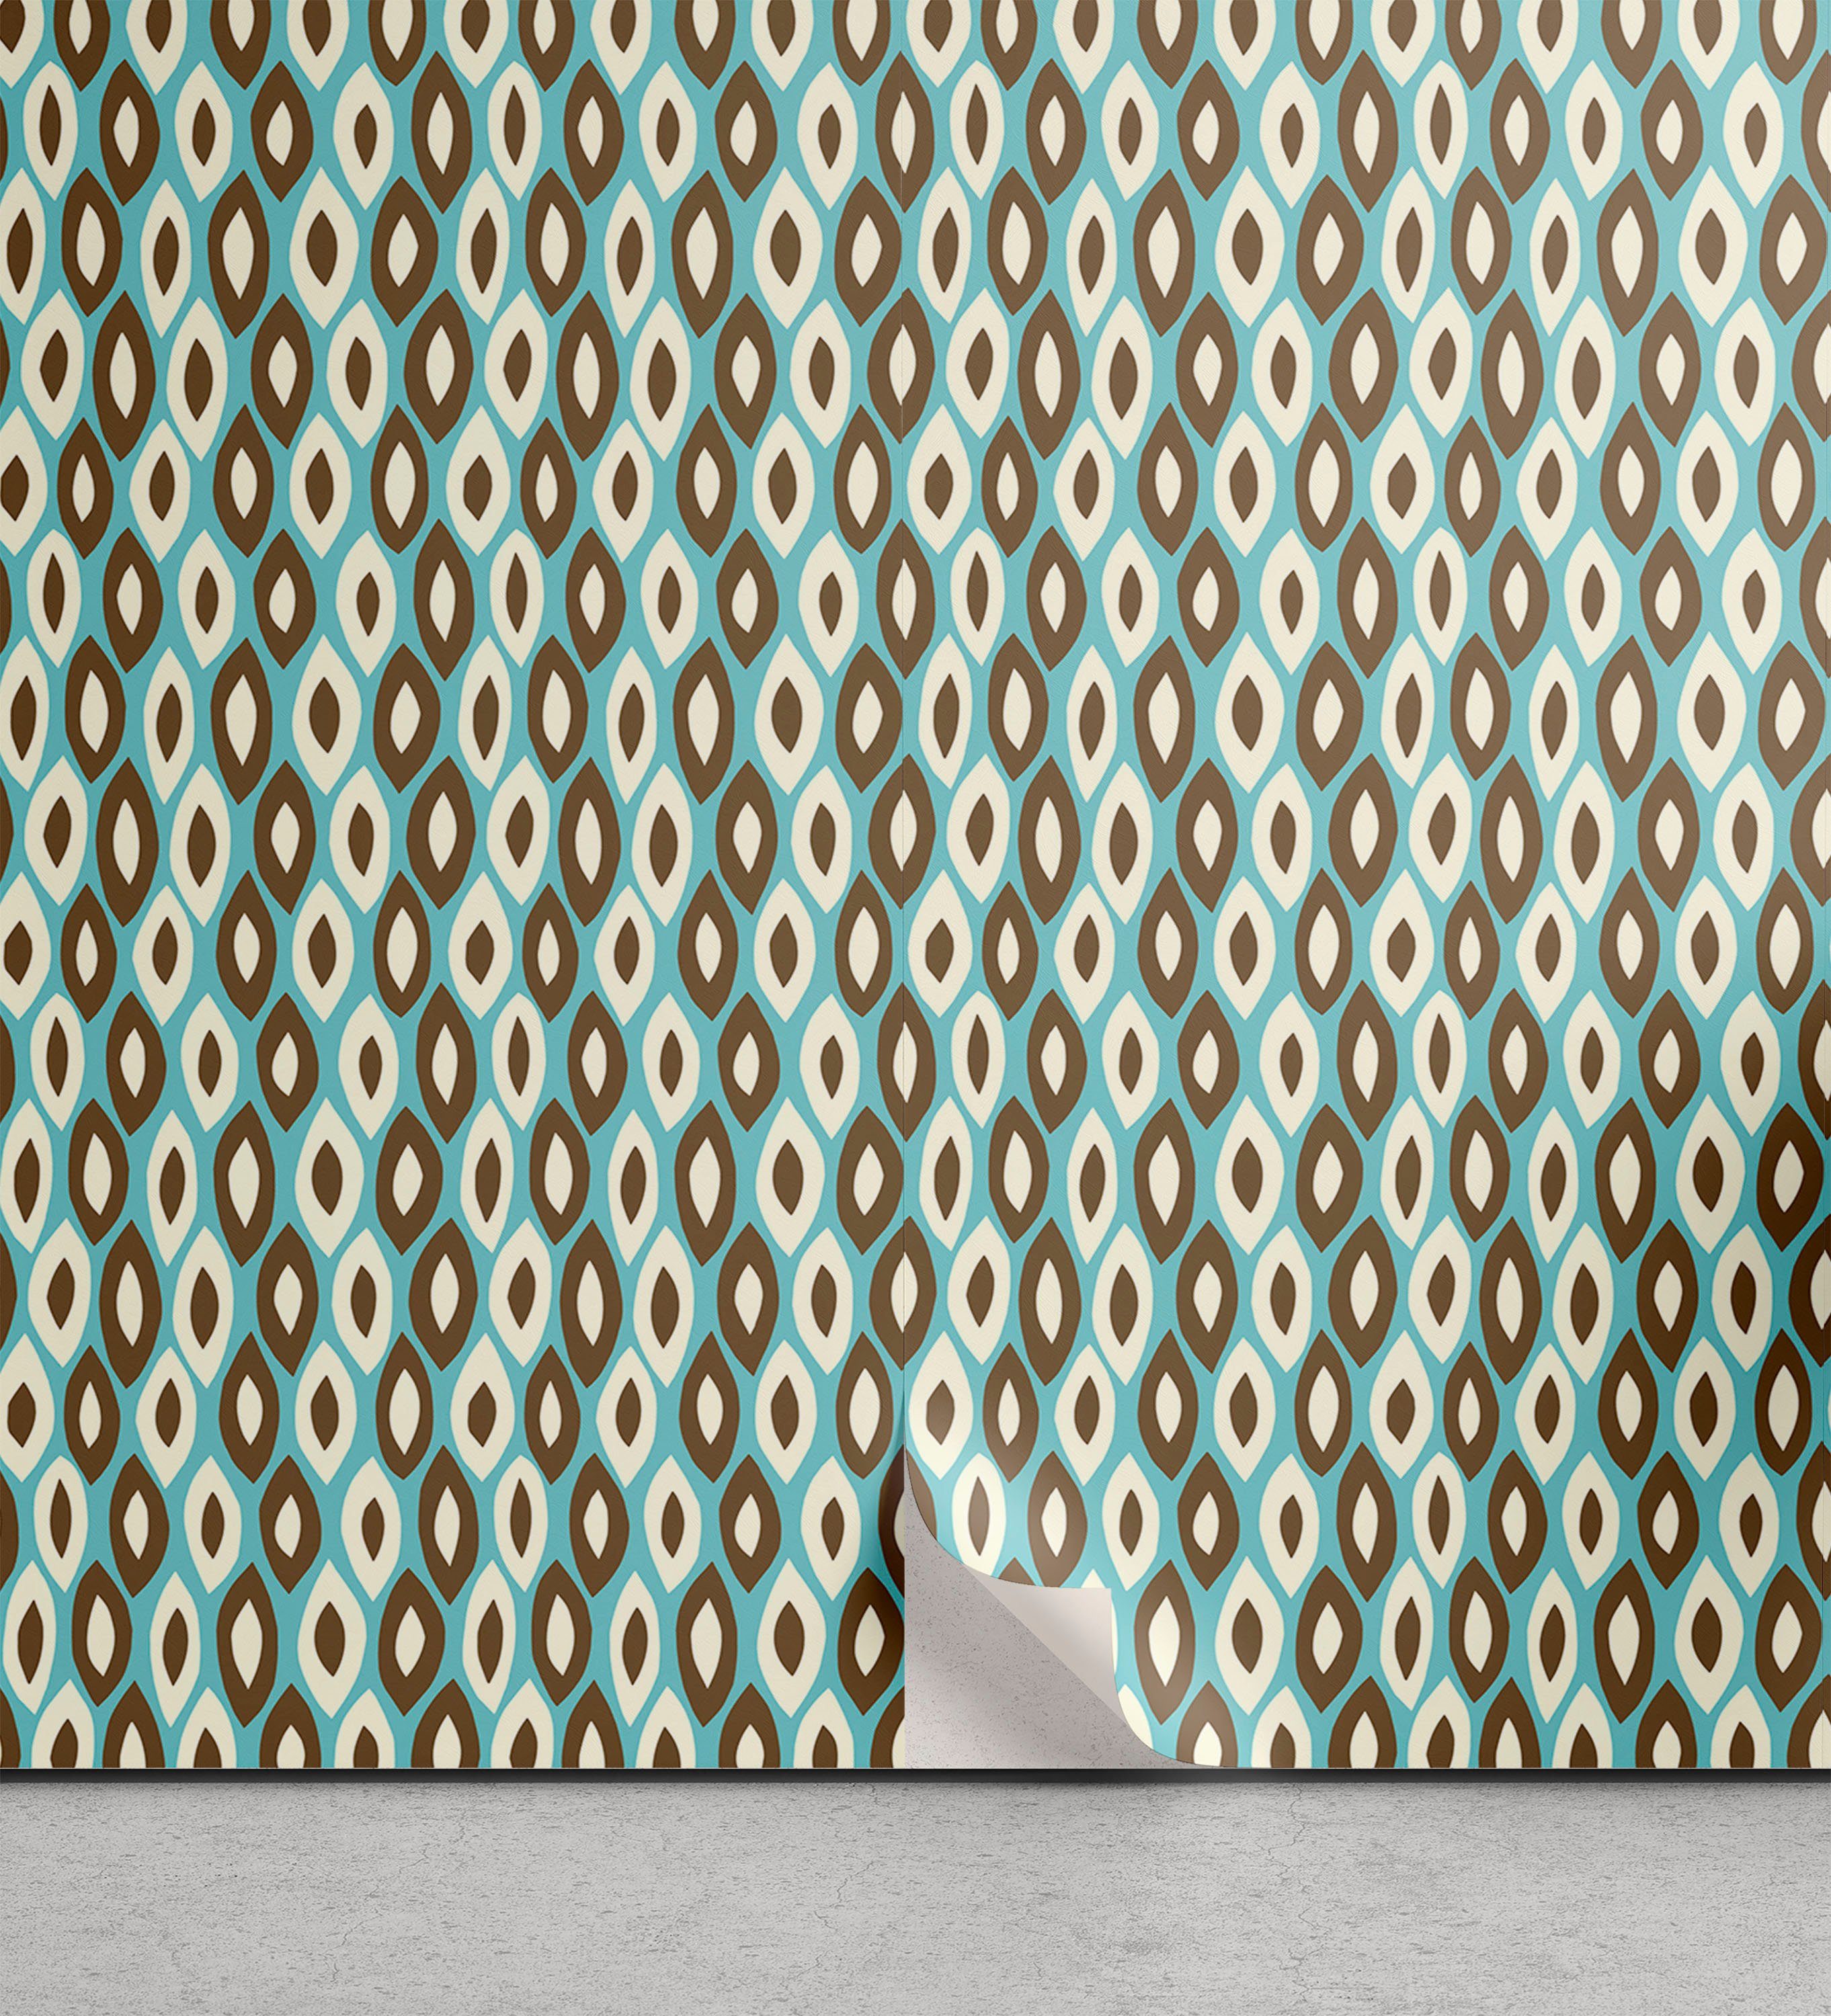 Abakuhaus Vinyltapete selbstklebendes Wohnzimmer Küchenakzent, Retro Simplistic ovale Formen